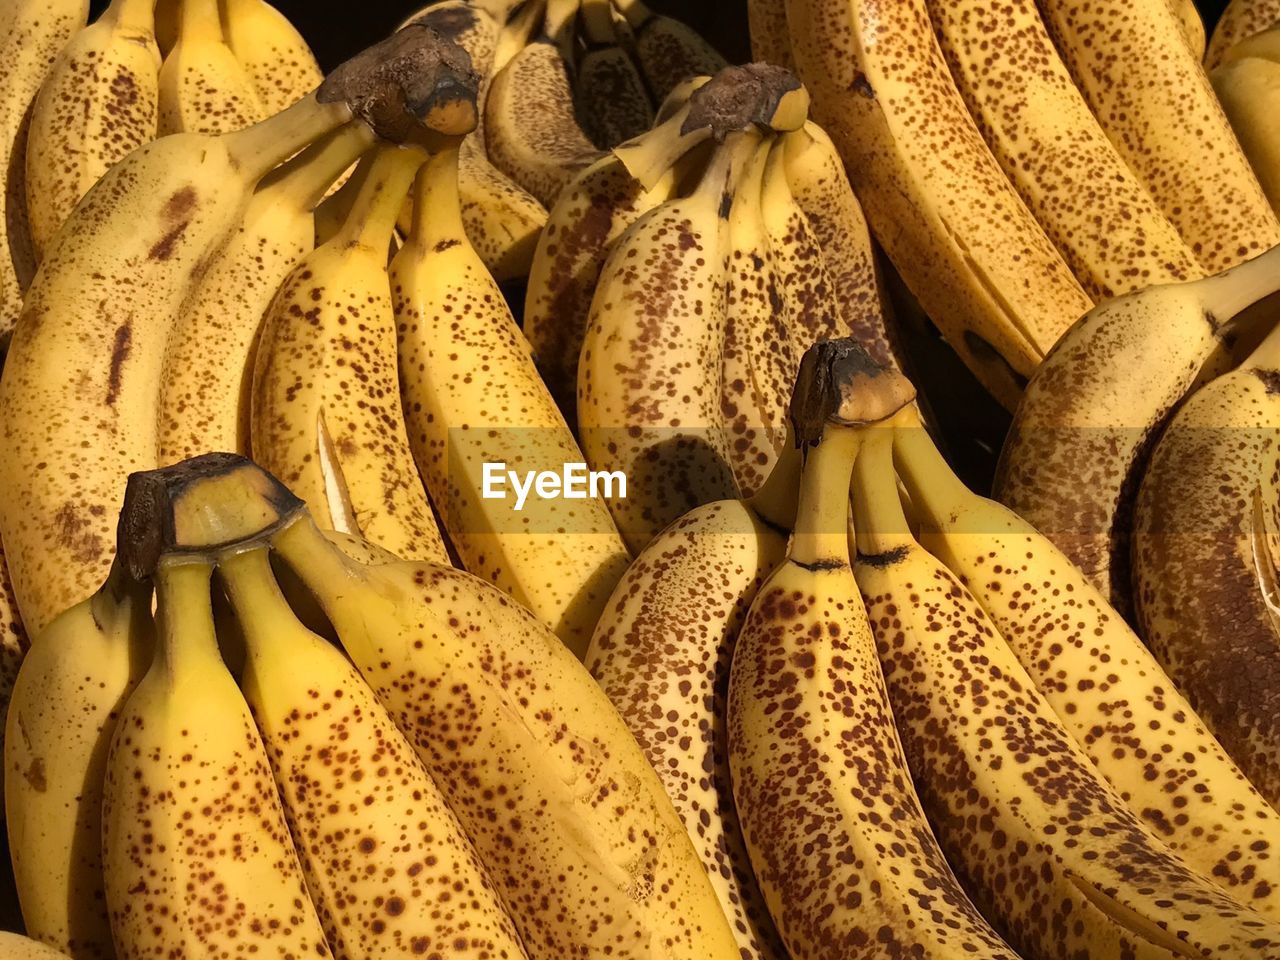 Full frame shot of yellow bananas